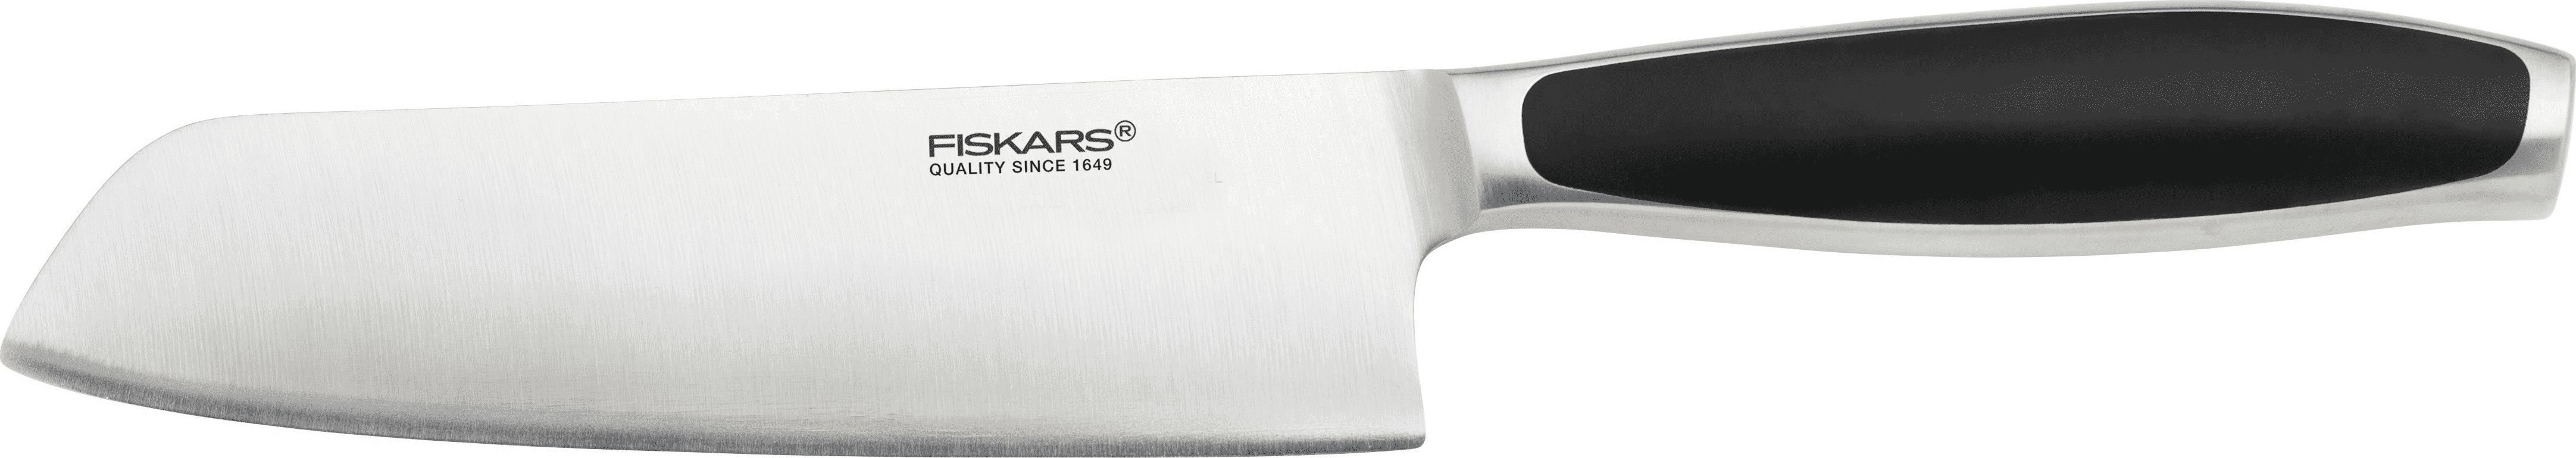 Нож 17 см. Нож сантоку fiskars norr 16 см. Fiskars quality since 1649 нож кухонный. Поварской нож fiskars кухонный картинки. Нож fiskars Royal купить.